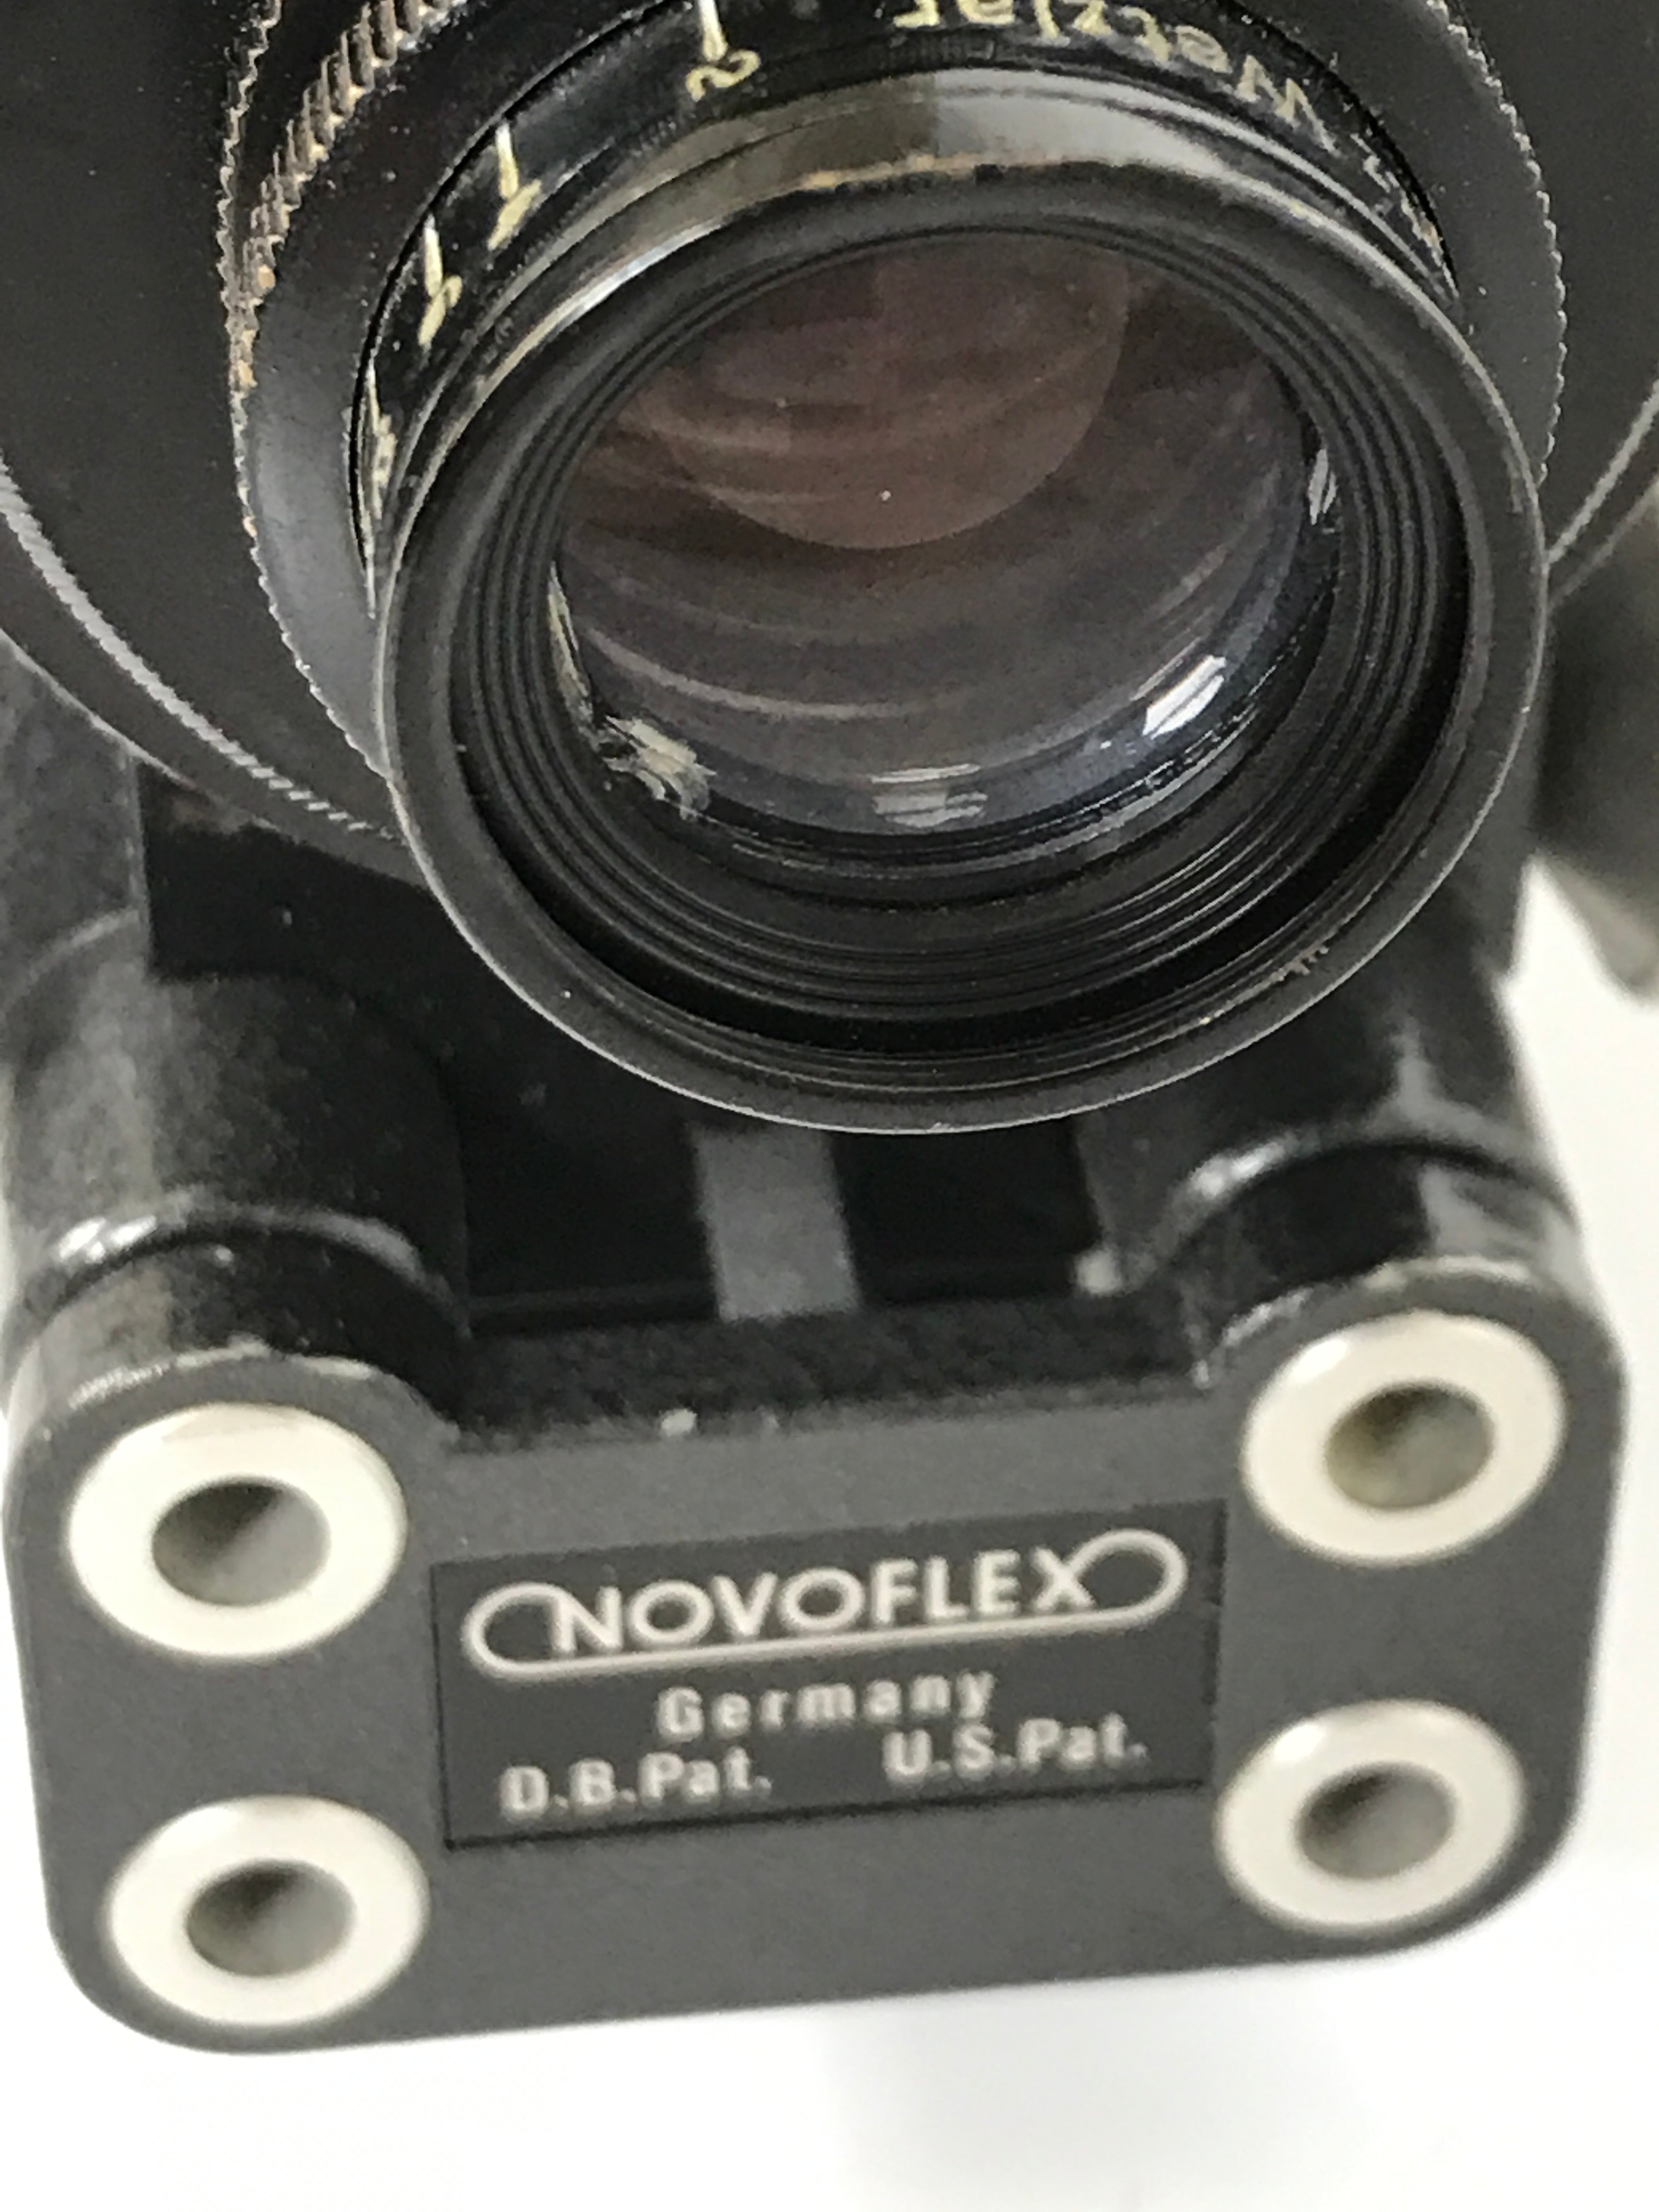 Vintage Novoflex Bellows with Leitz f/8 1:4.5 lens